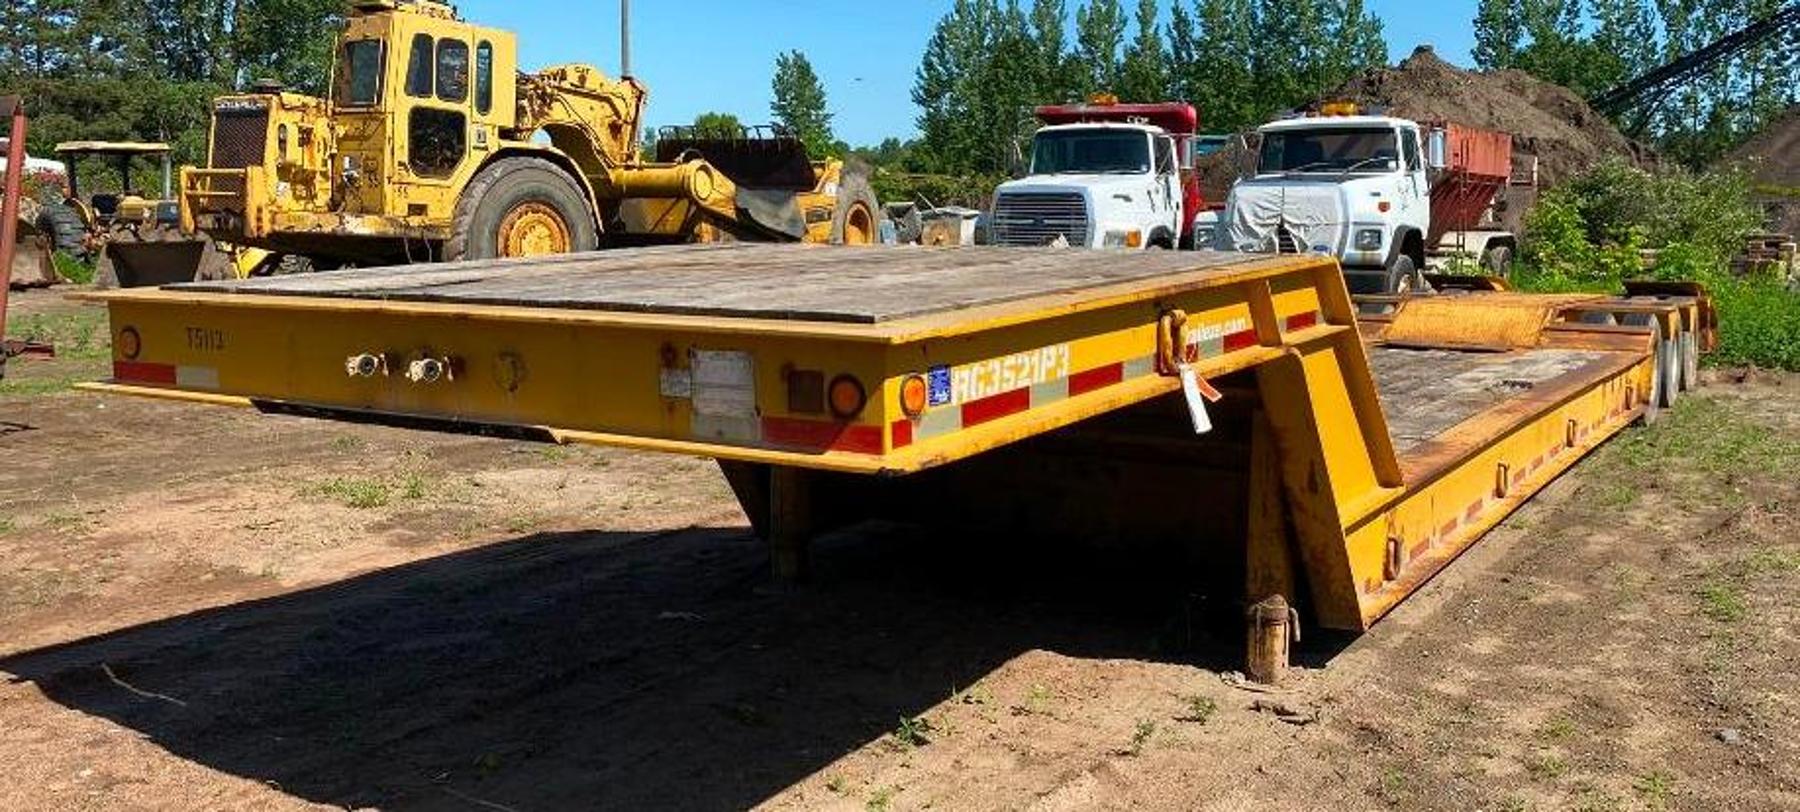 Excavating Surplus Equipment: 52' Step Deck, Trucks, Loader, End Dump, Roller